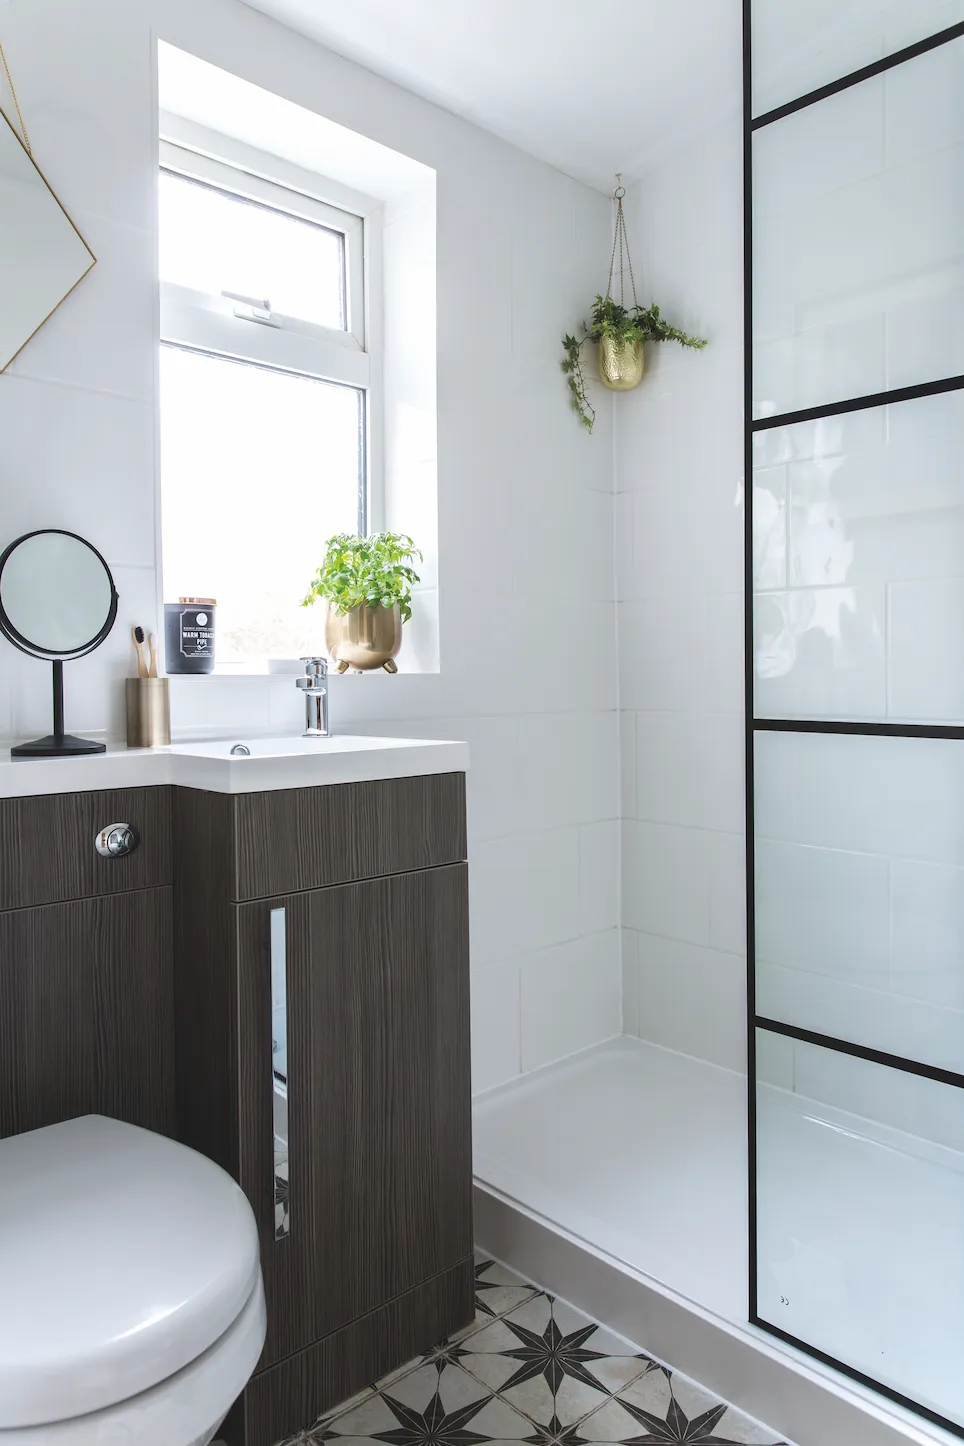 Bathroom makeover: 'Our bathroom feels like a mini boutique hotel'